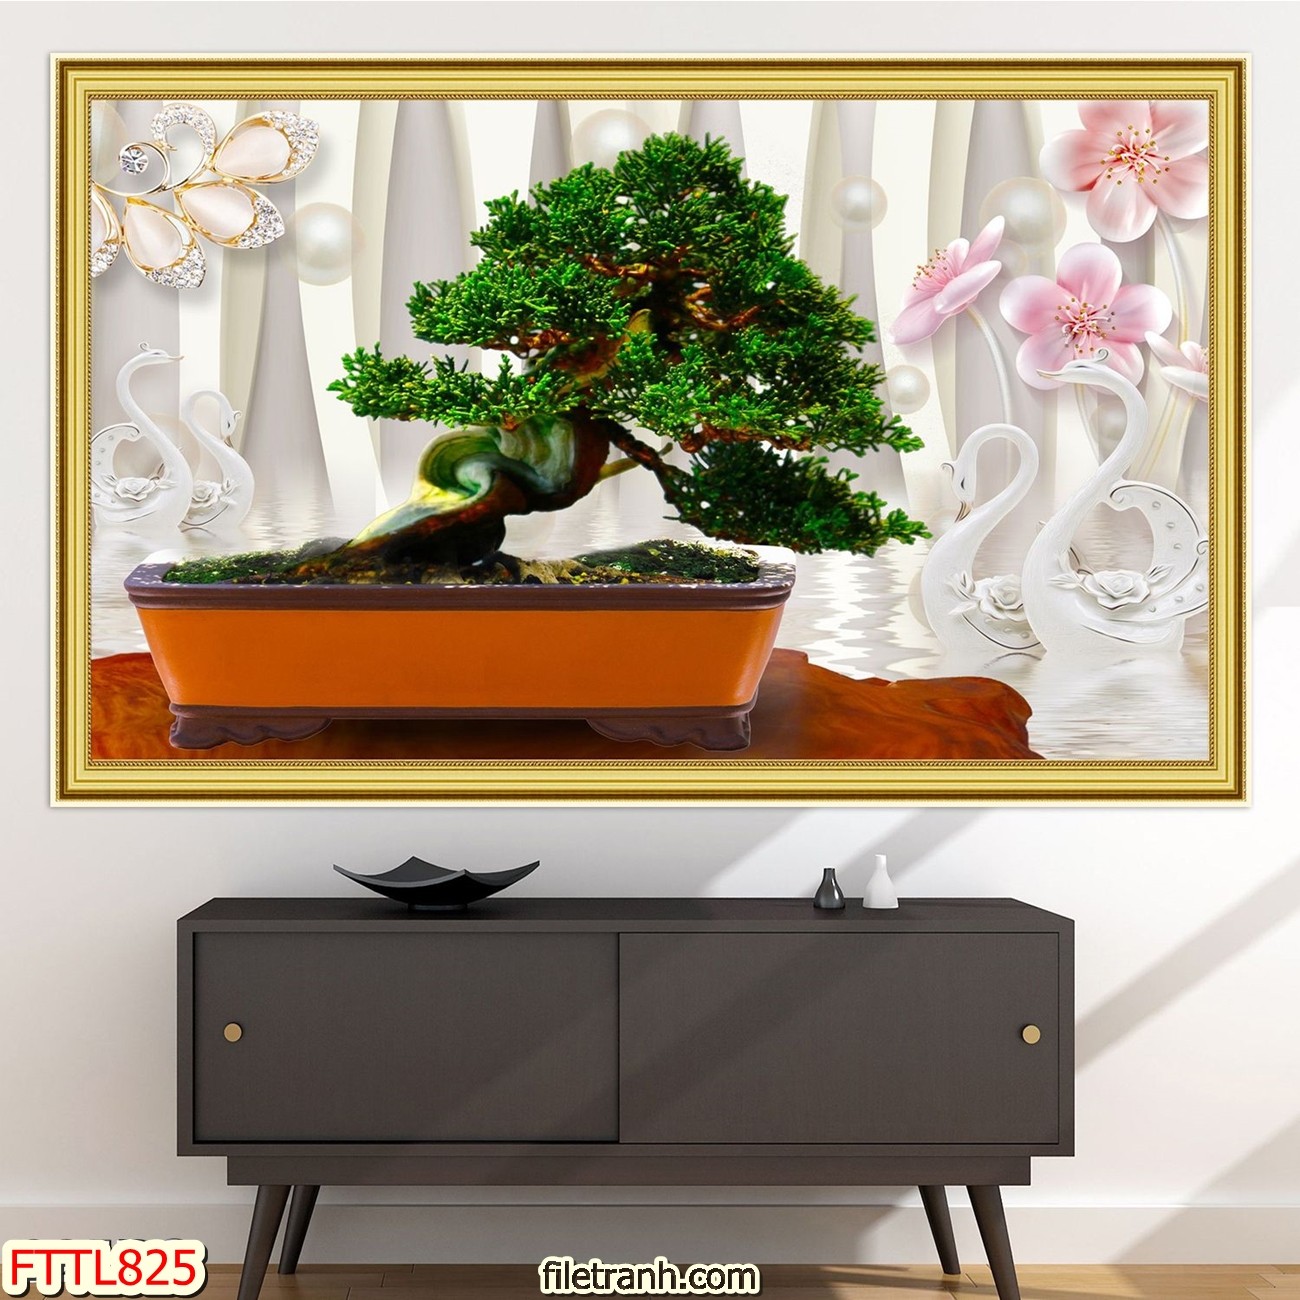 https://filetranh.com/file-tranh-chau-mai-bonsai/file-tranh-chau-mai-bonsai-fttl825.html